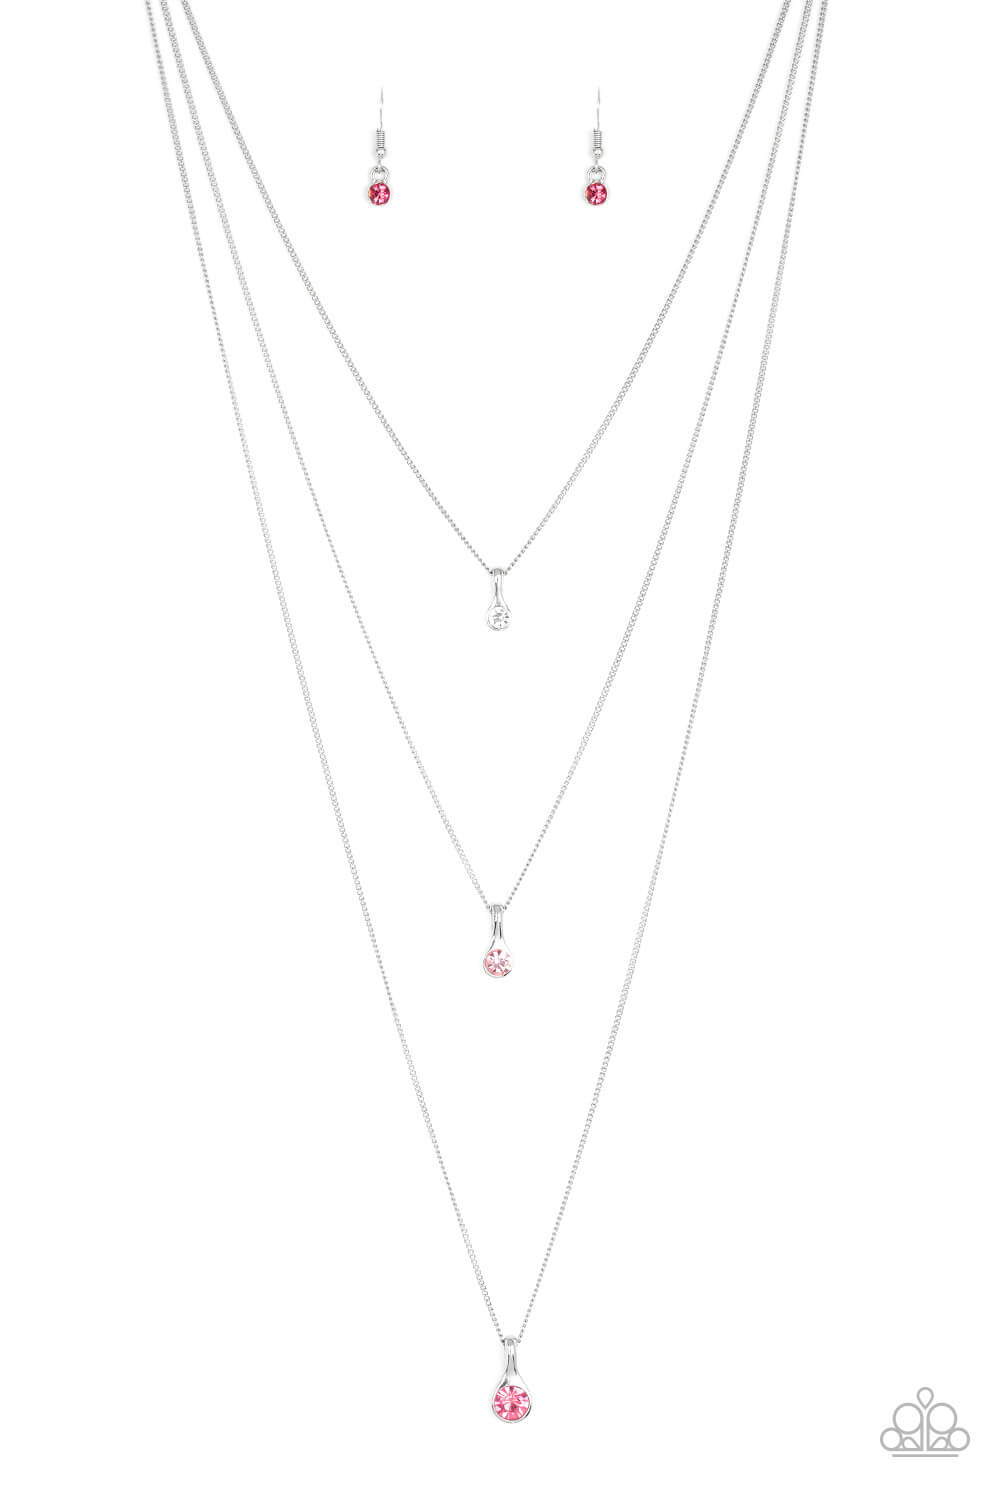 Crystal Chic - Pink Necklace Set - Princess Glam Shop